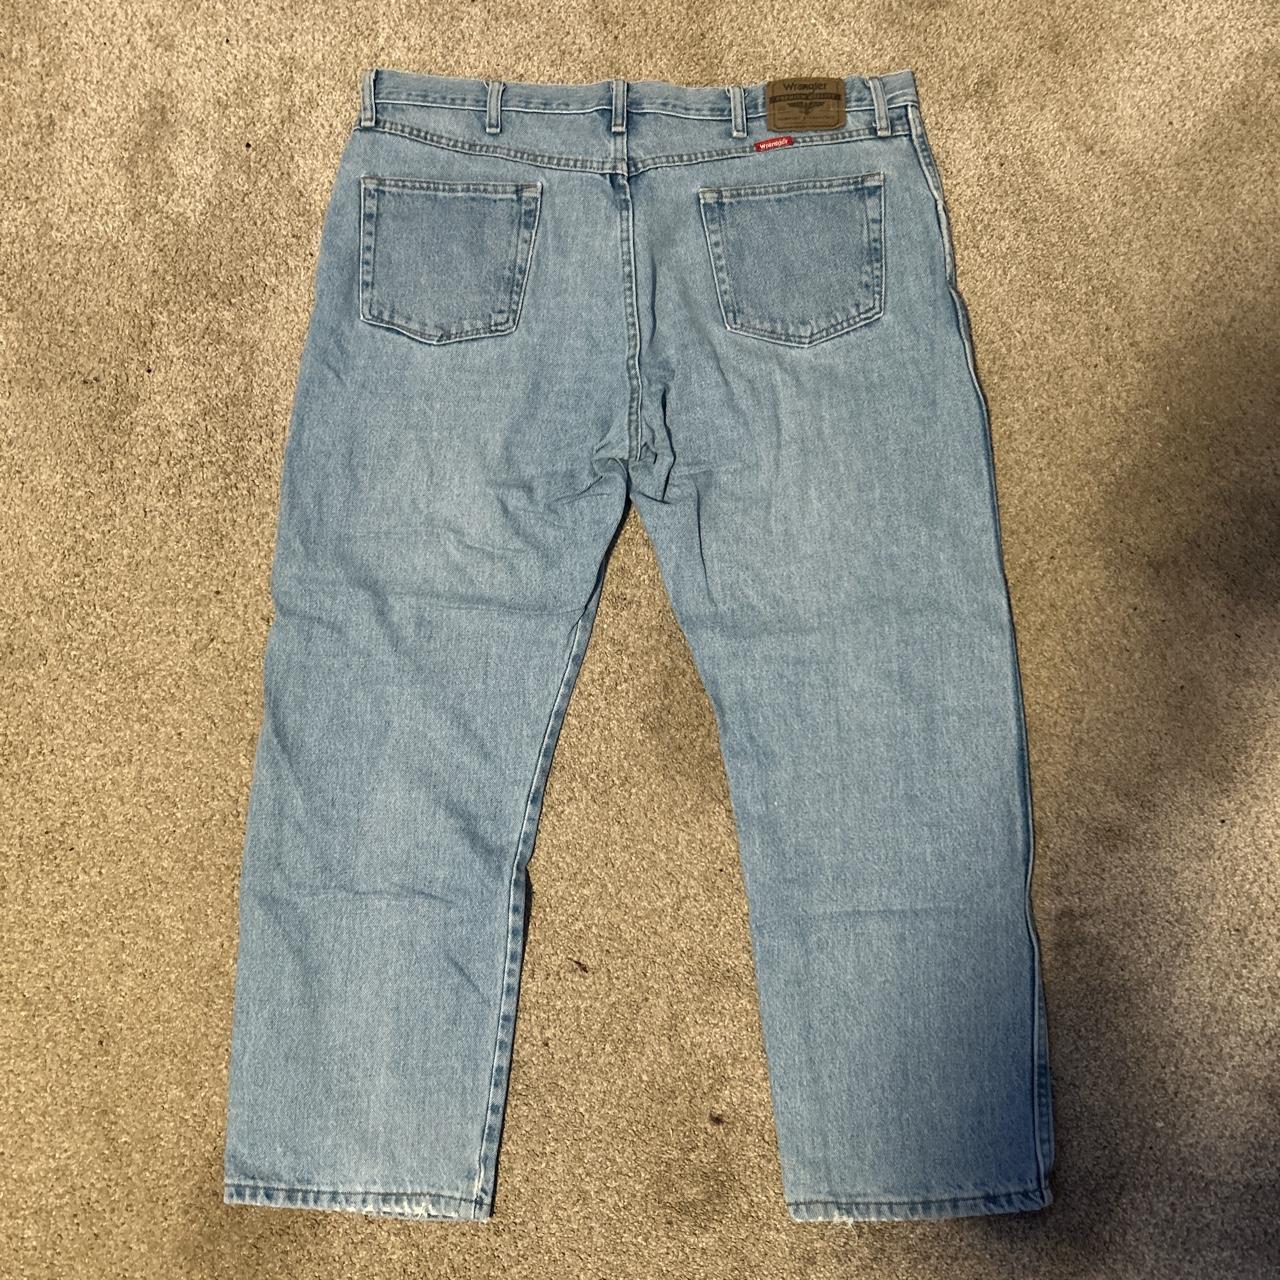 Super Baggy Light Blue Wrangler Jeans 40 X 30 No Depop 7045